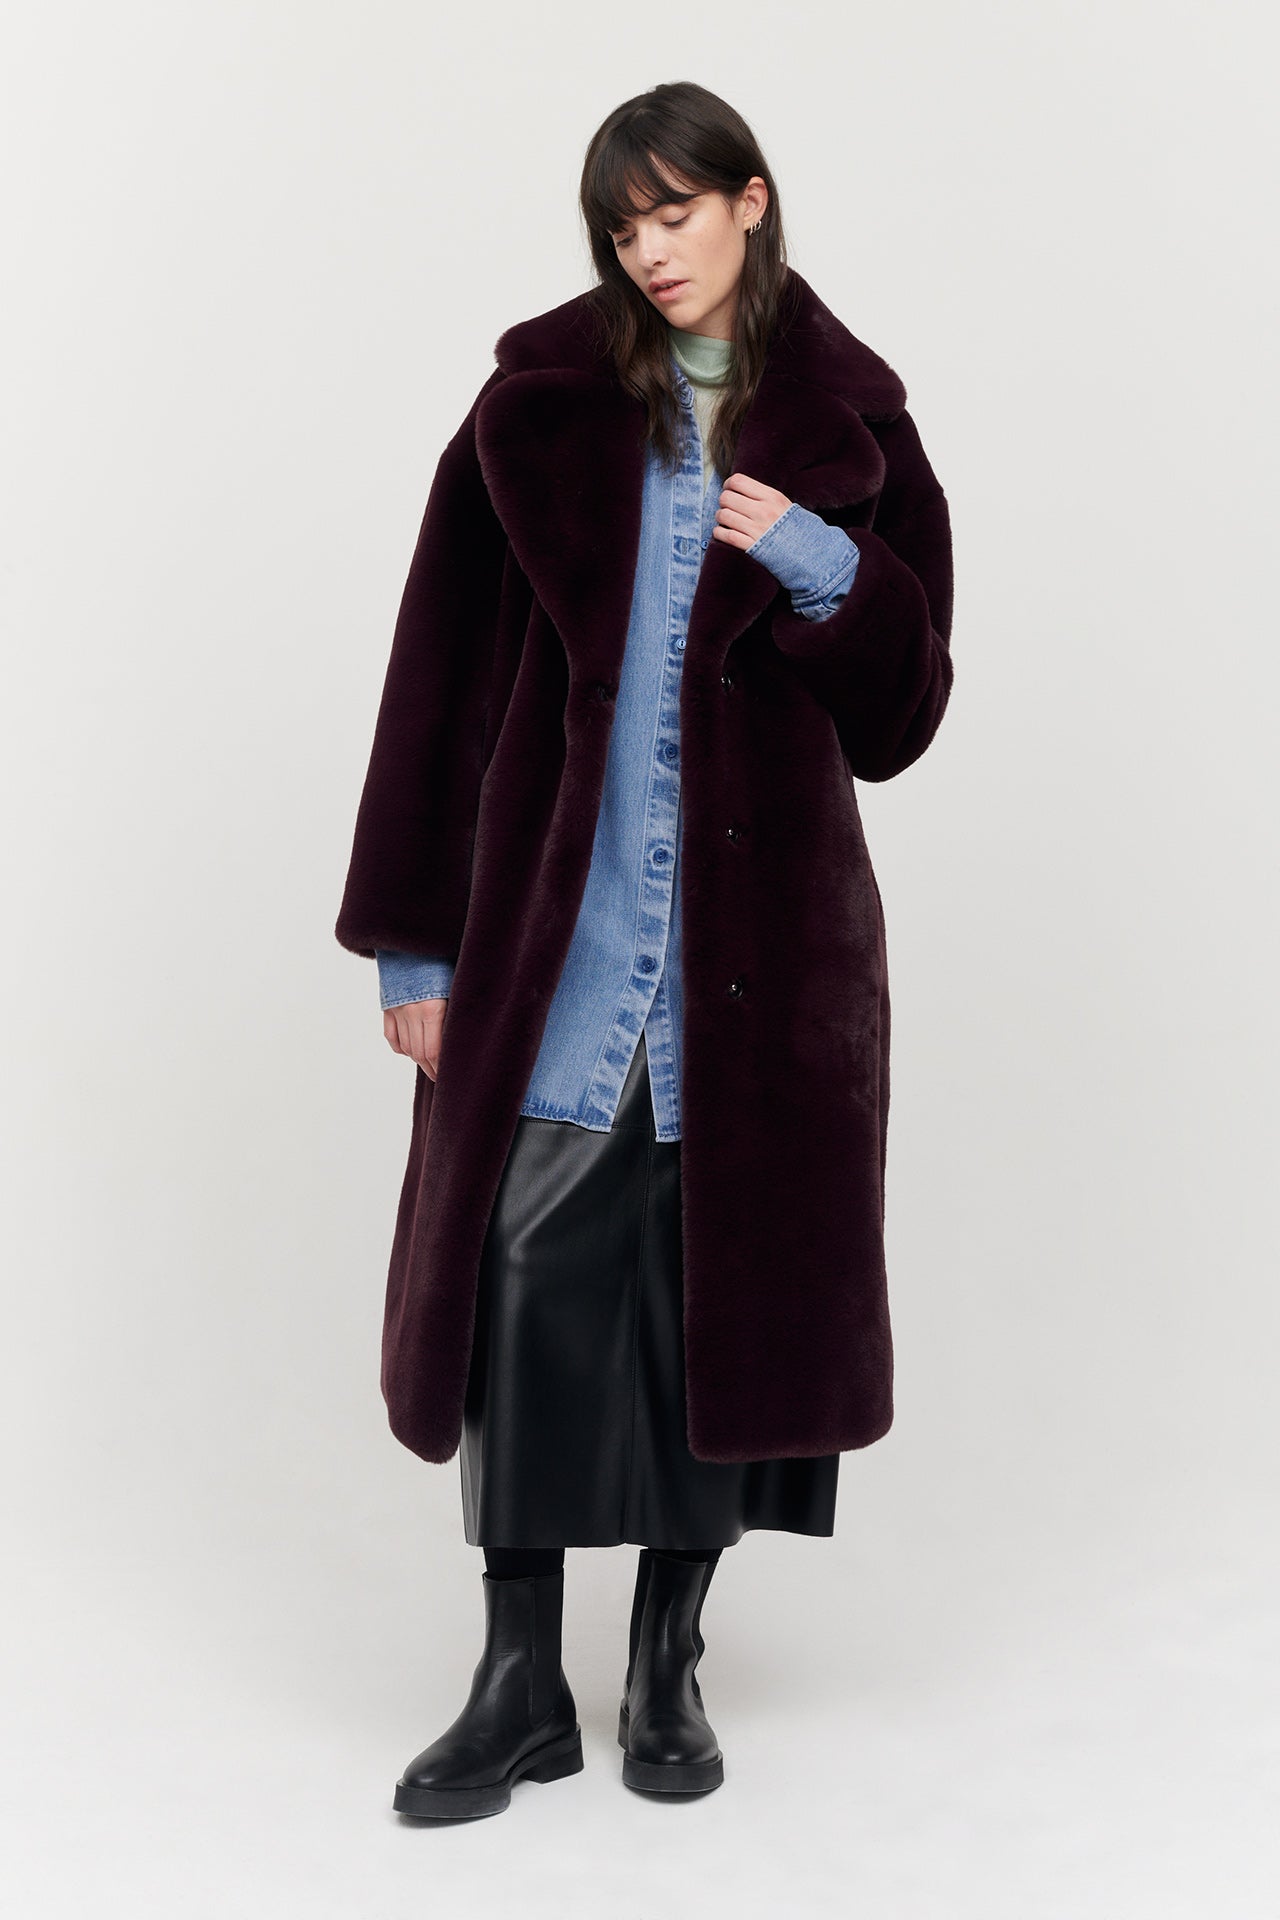 Trending Winter Coats 2023 2024 - Jakke burgundy faux fur coat. Long faux fur coat with single-breasted button fastening and side slit pockets. 